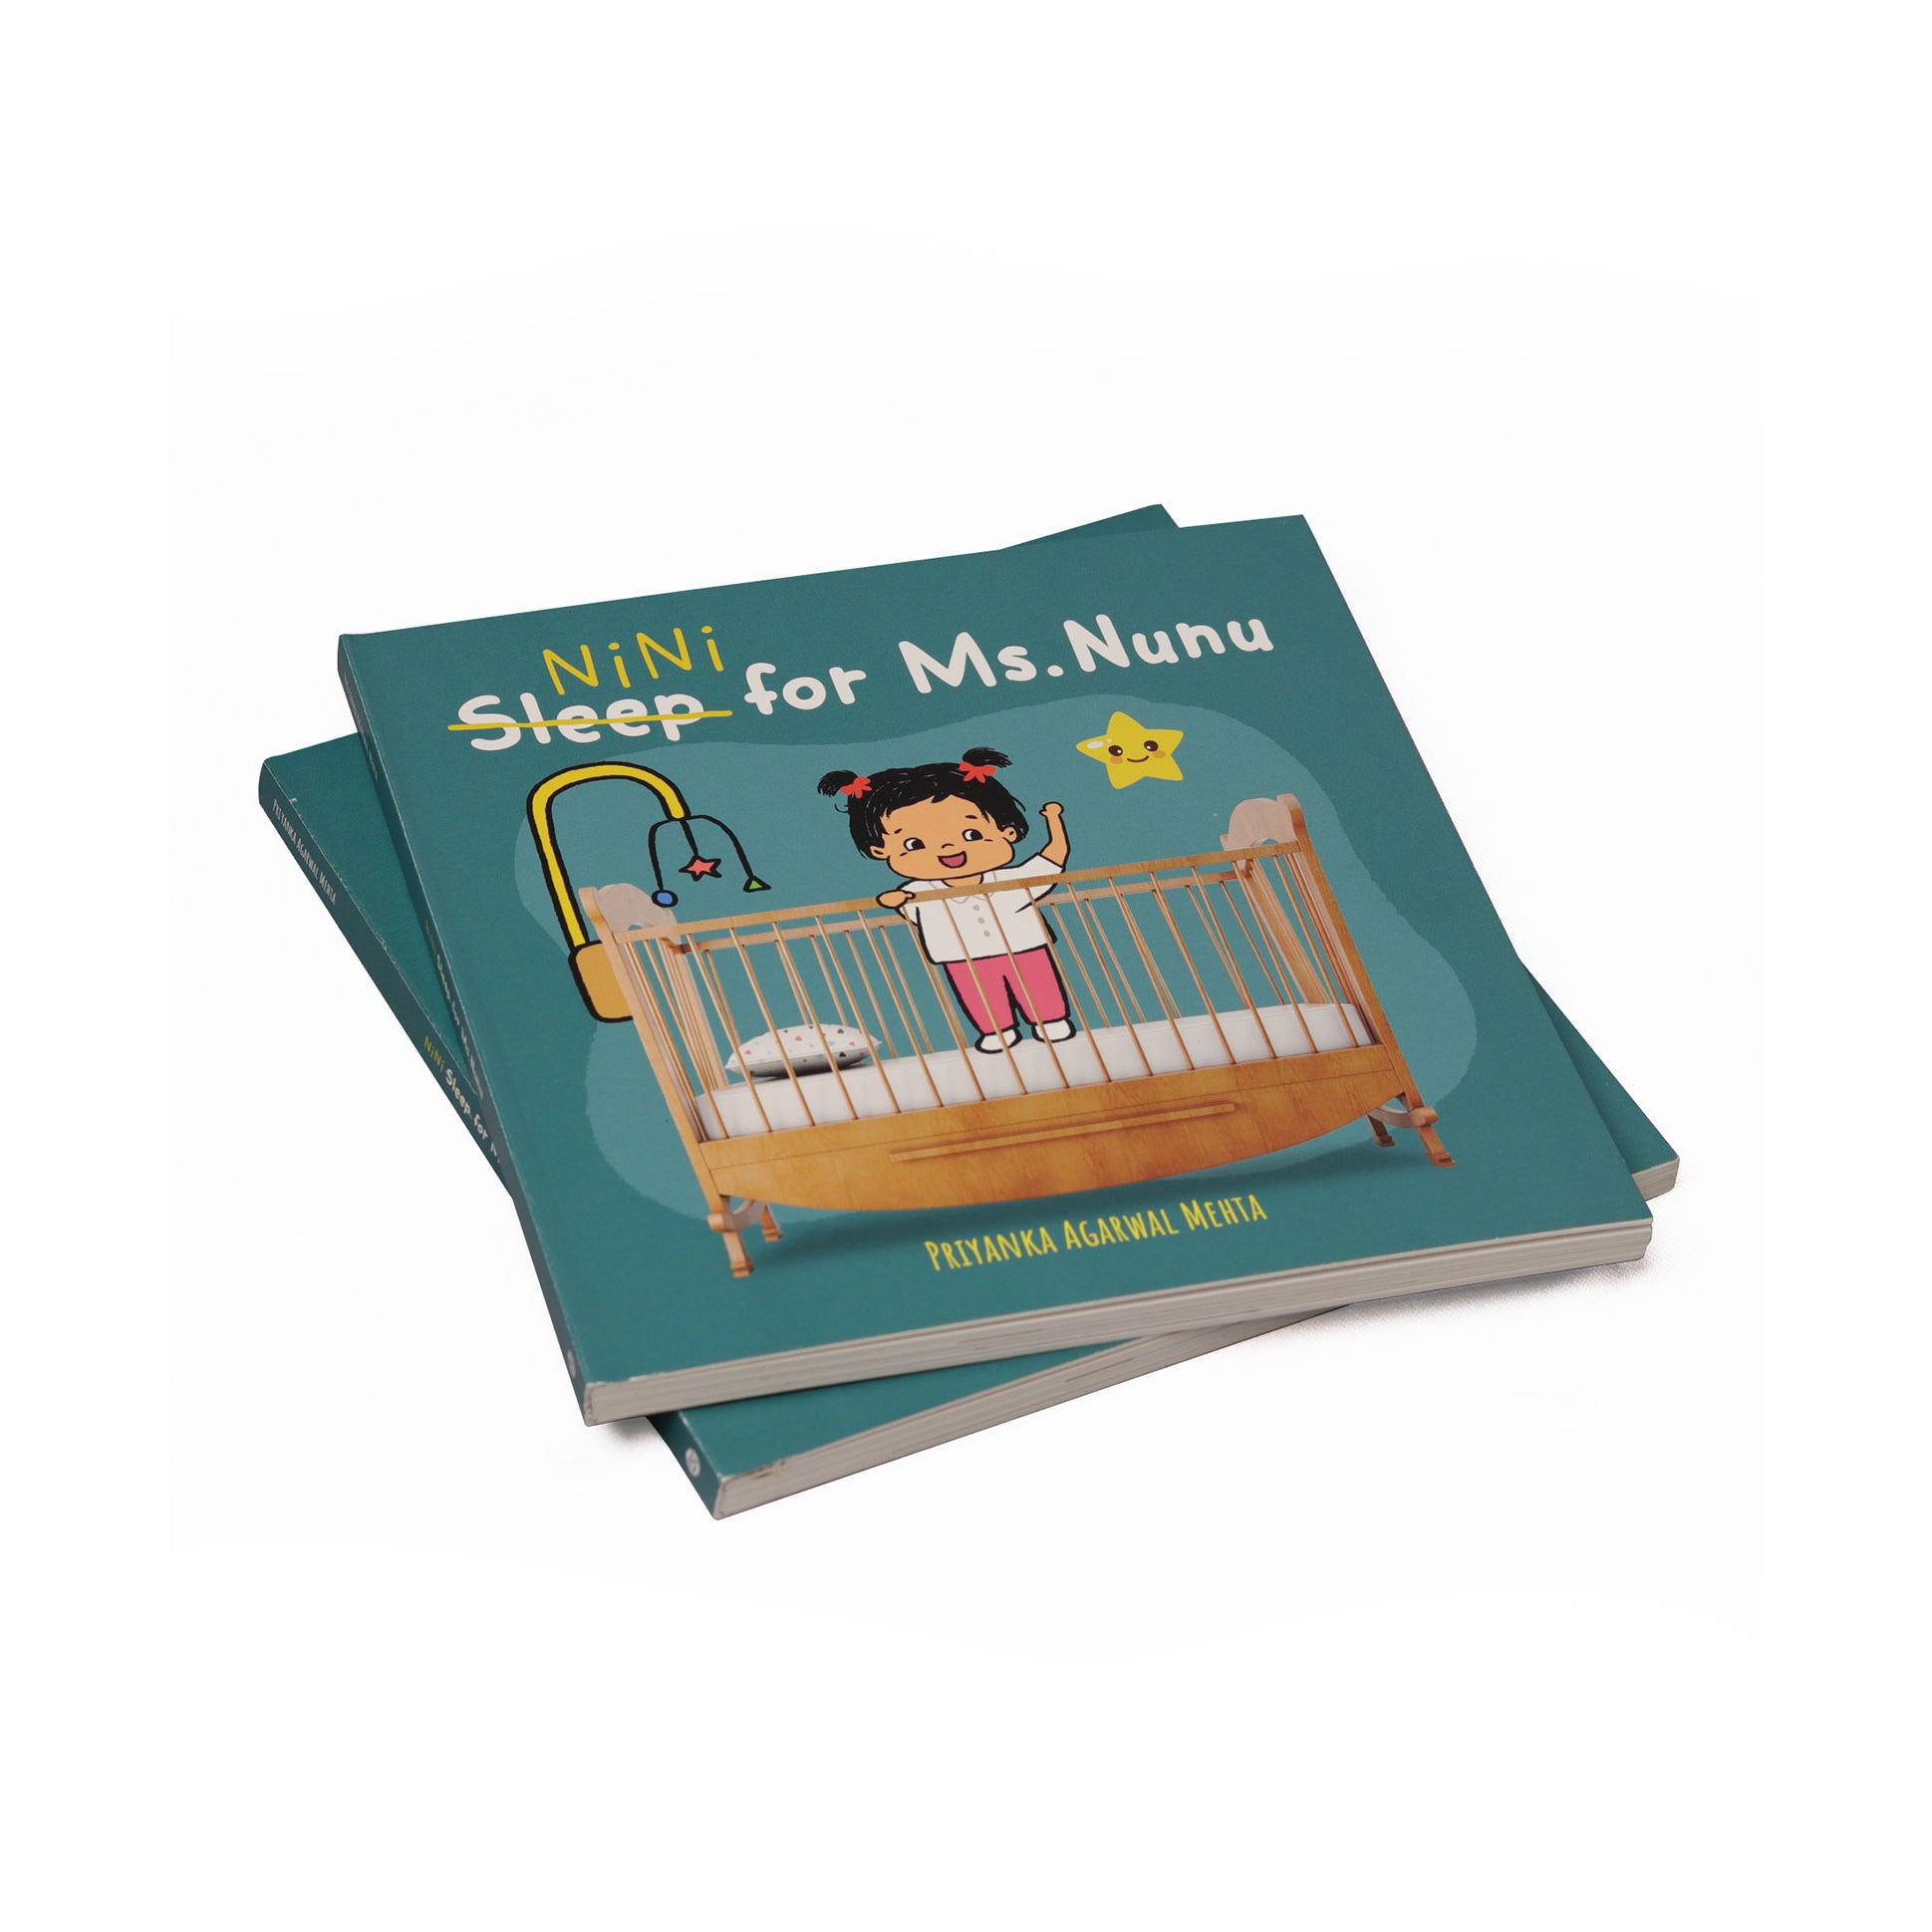 Nini For Ms Nunu (Lift-The-Flap Book)